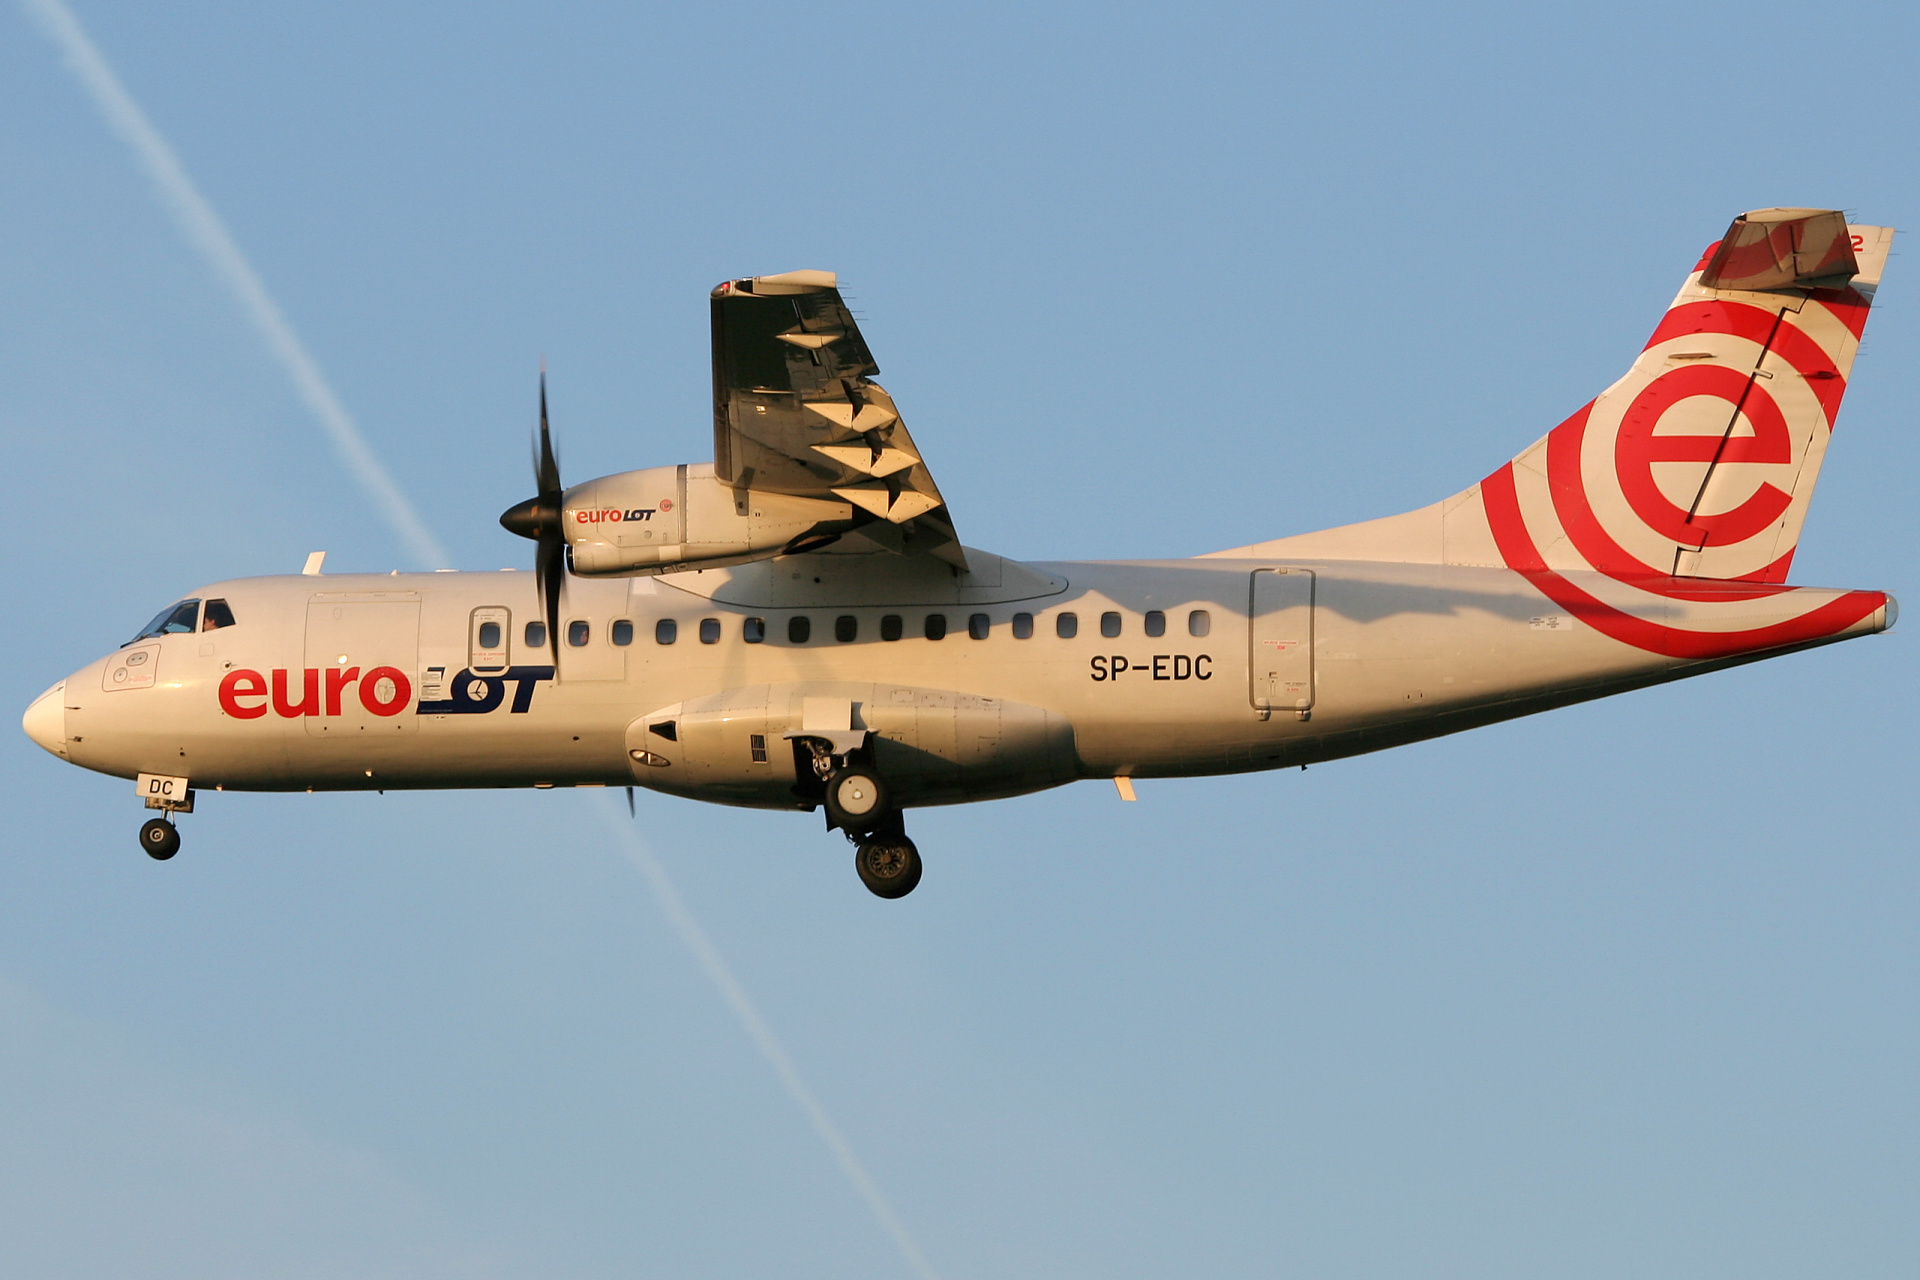 SP-EDC (Samoloty » Spotting na EPWA » ATR 42 » EuroLOT)